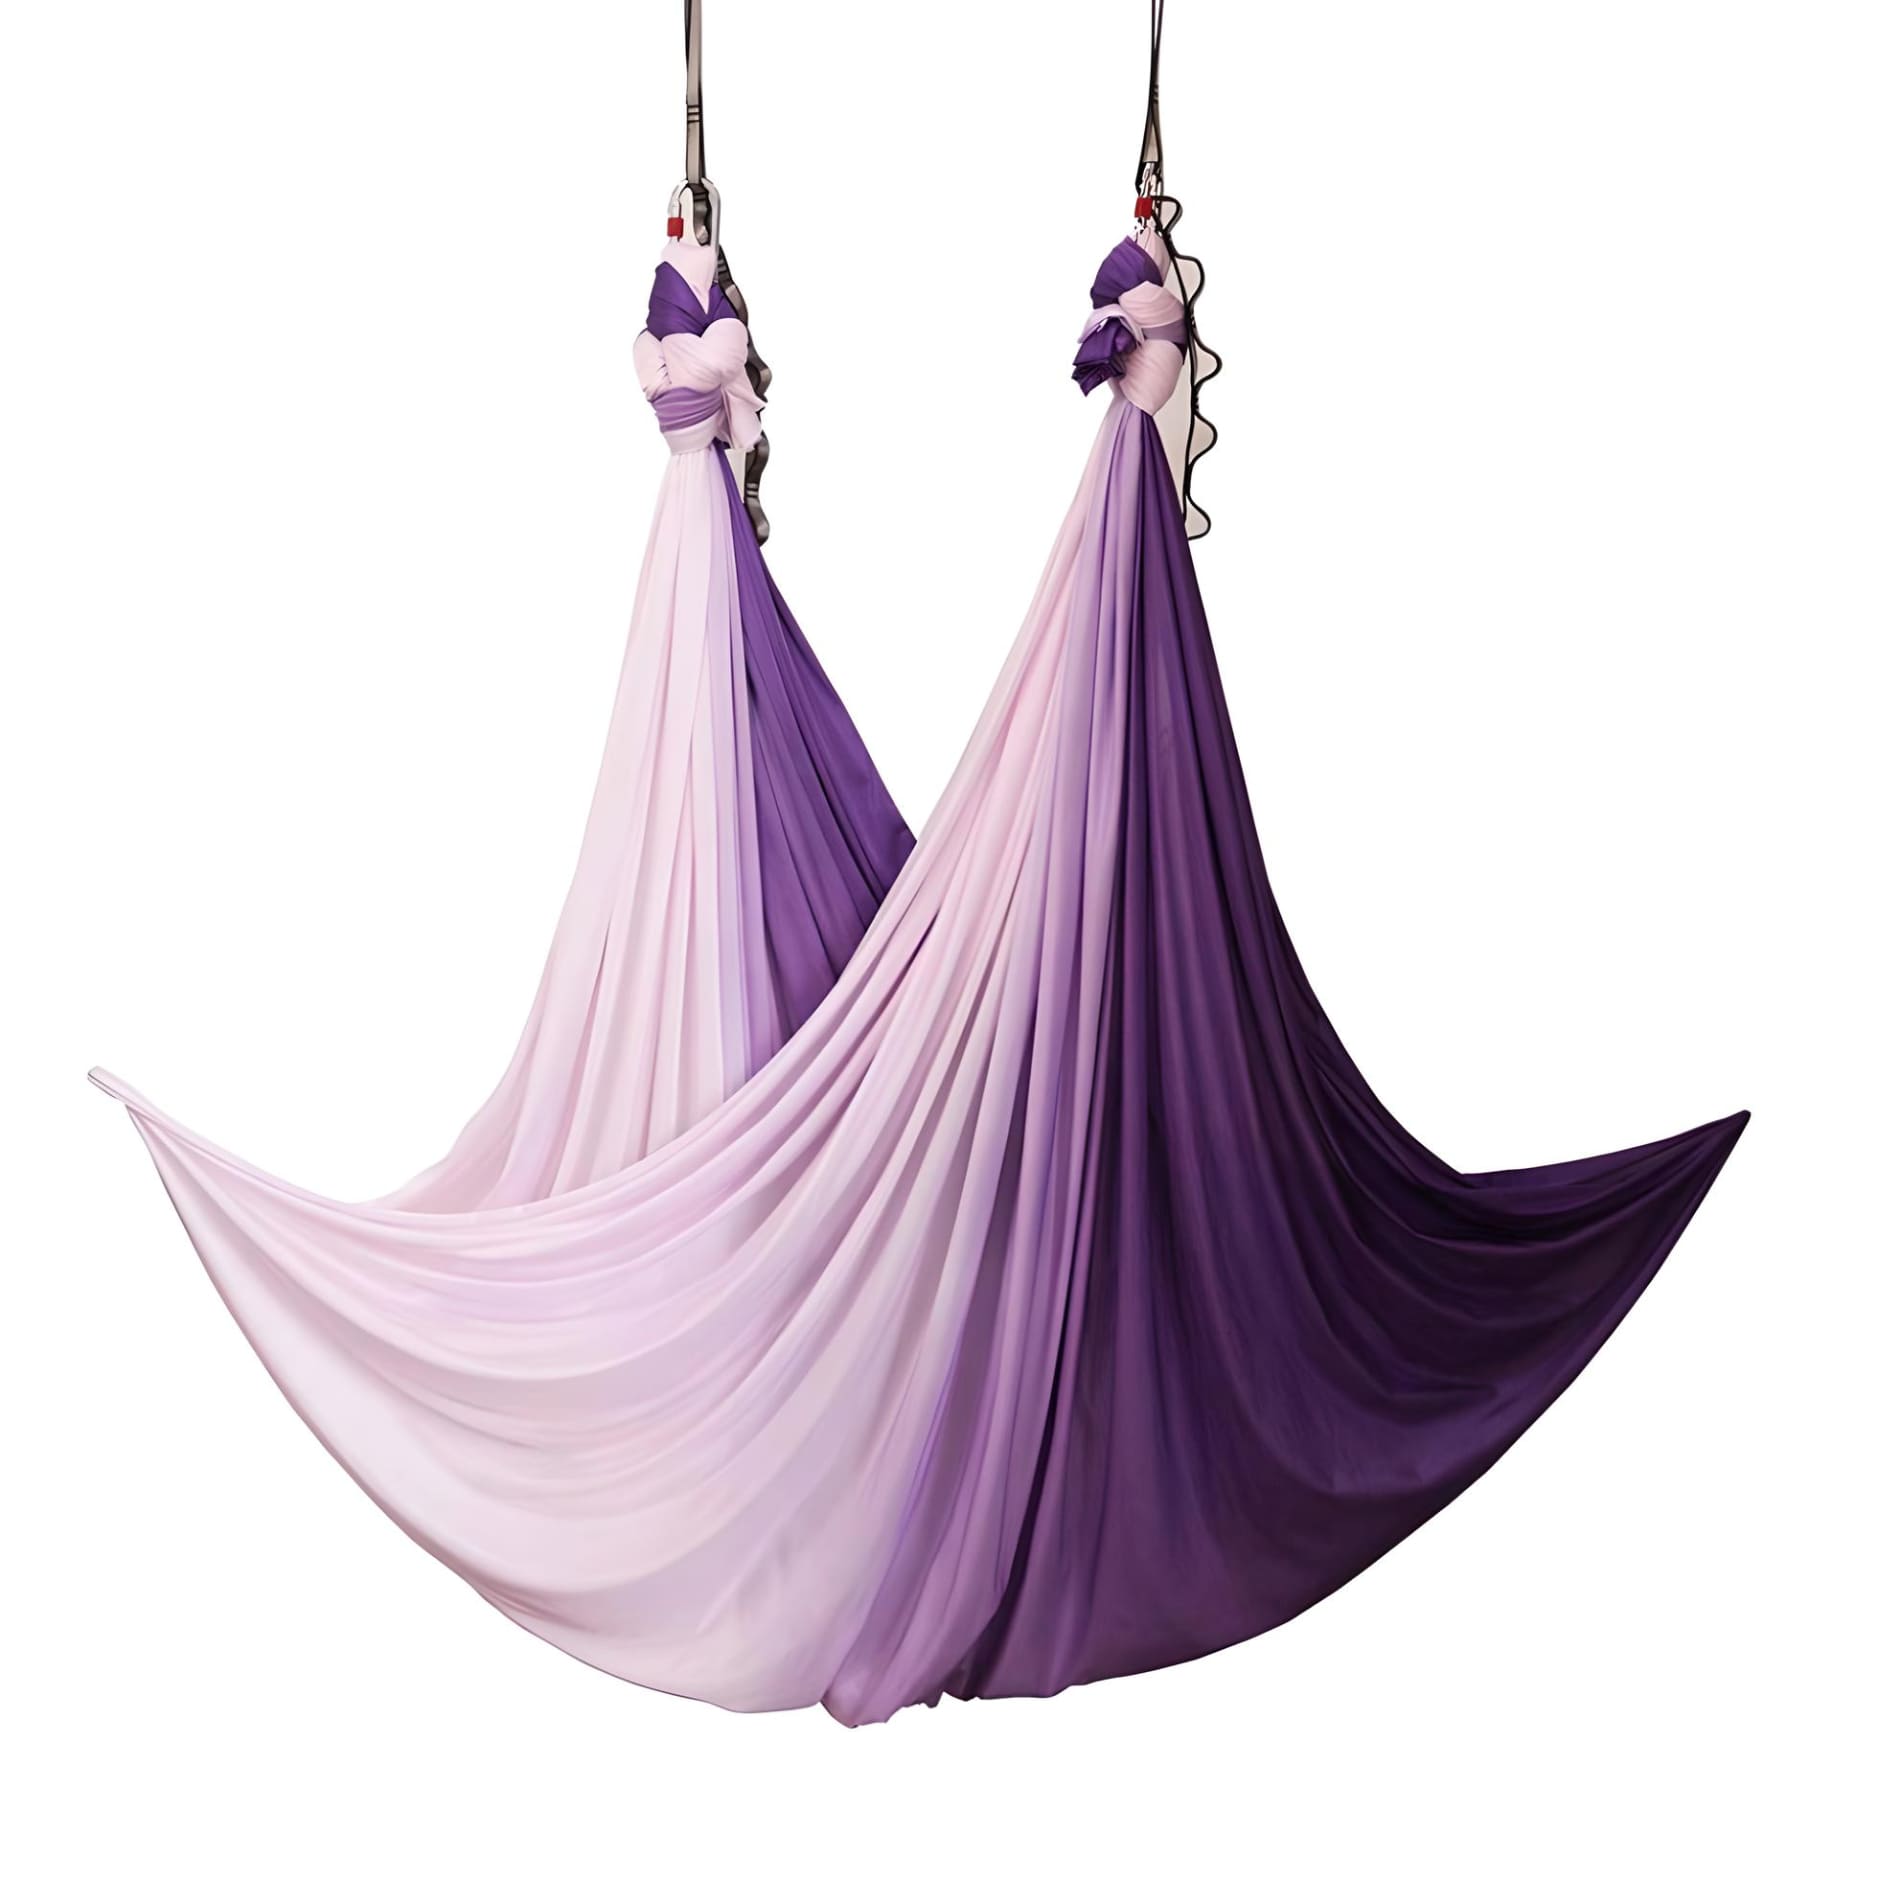 yoga-silk-swing-in-purple-and-white